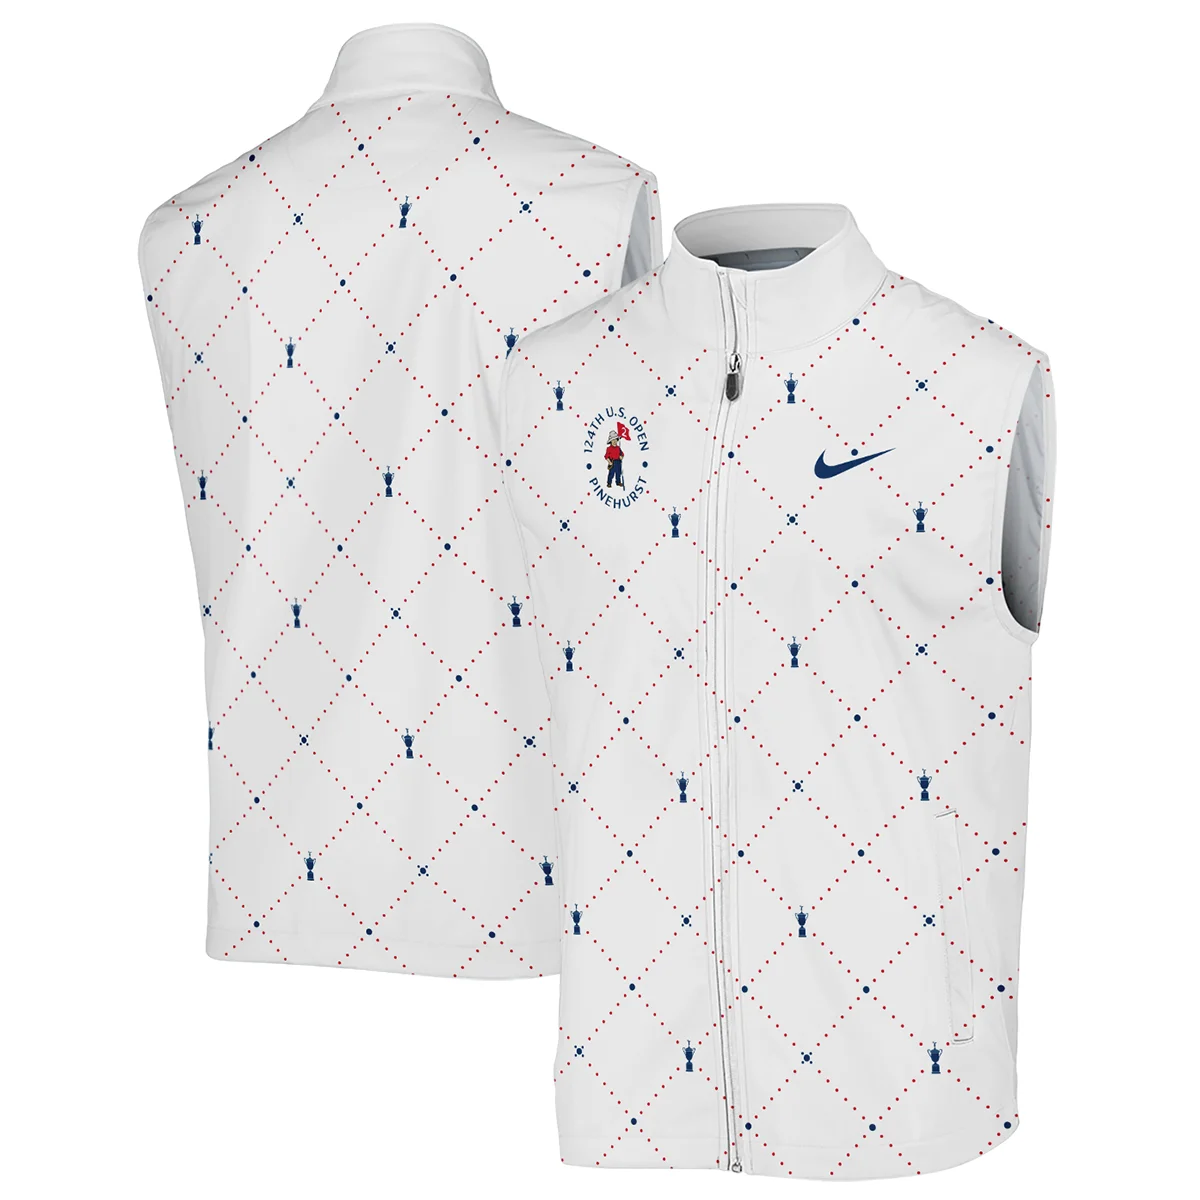 Argyle Pattern With Cup 124th U.S. Open Pinehurst Nike Unisex T-Shirt Style Classic T-Shirt